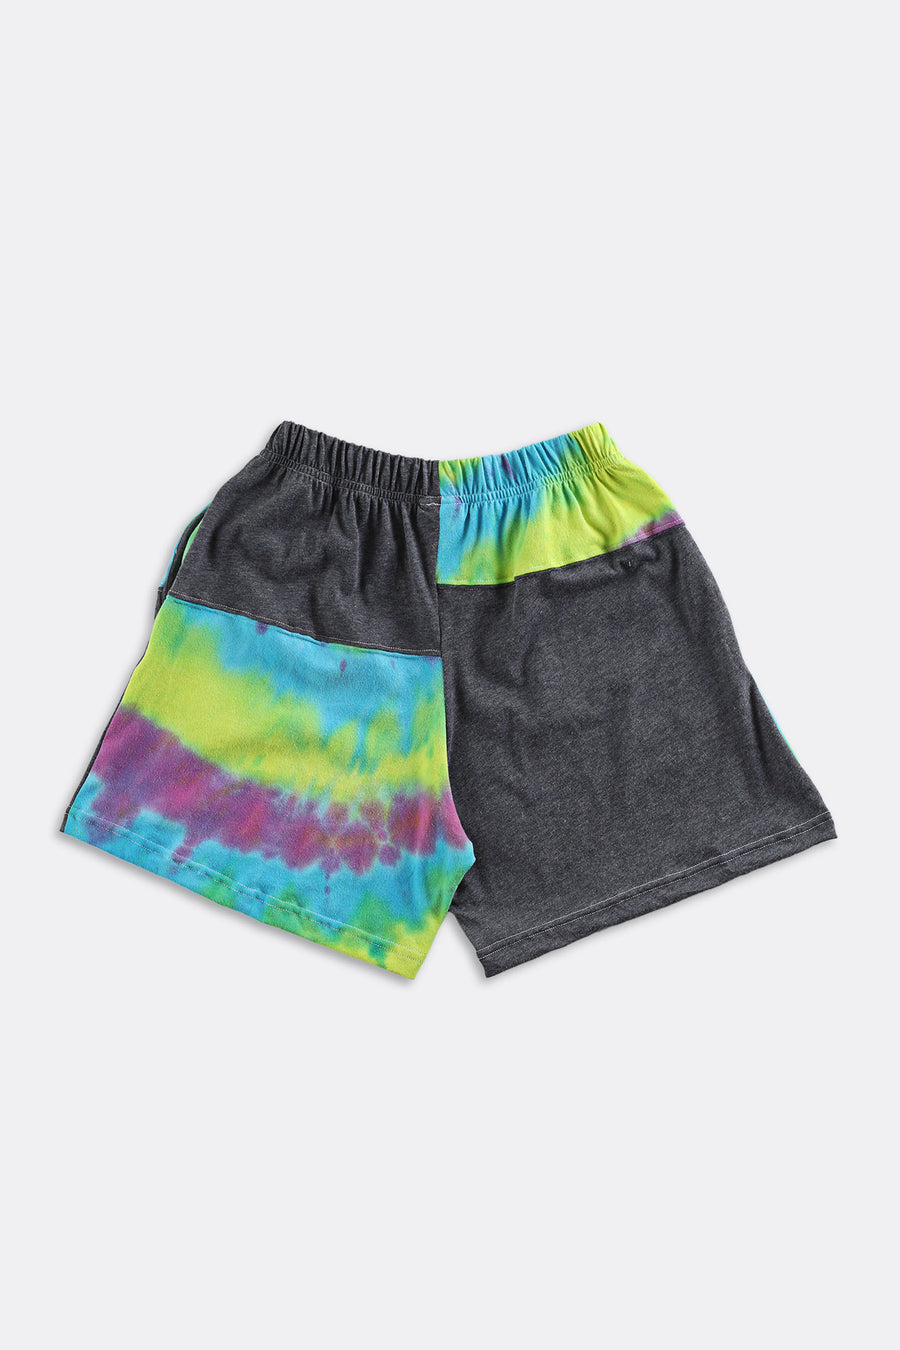 Unisex Rework Adidas Patchwork Tee Shorts - Women-XS, Men-XXS